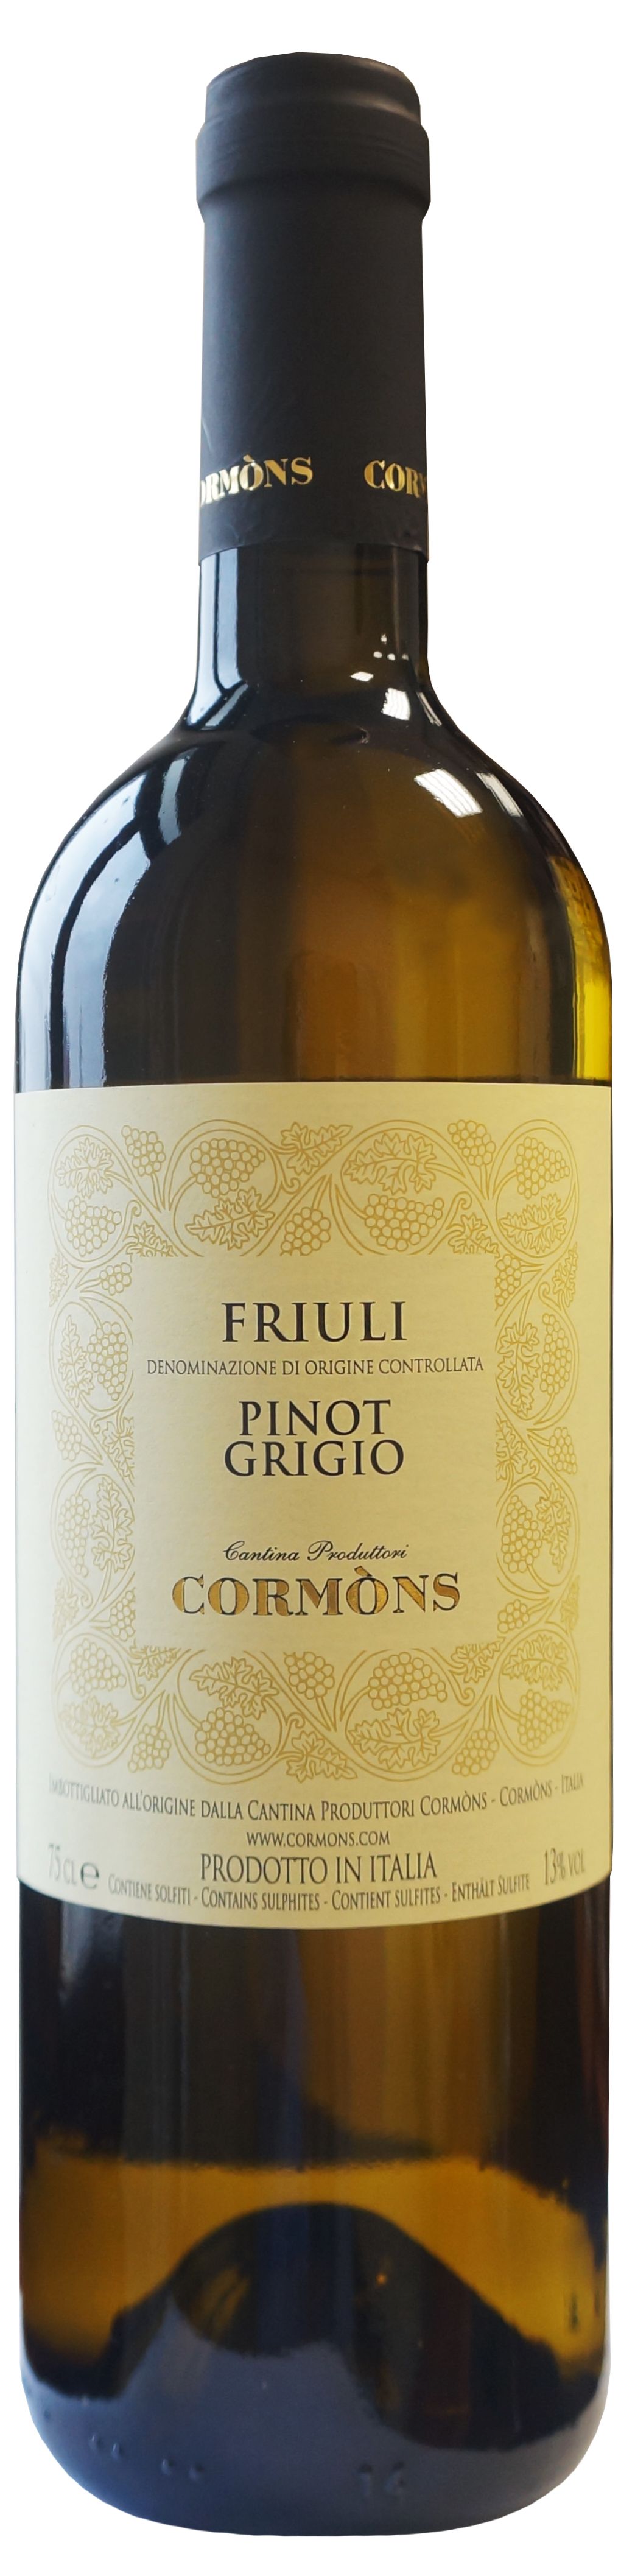 Cormons, Pinot Grigio, 2014